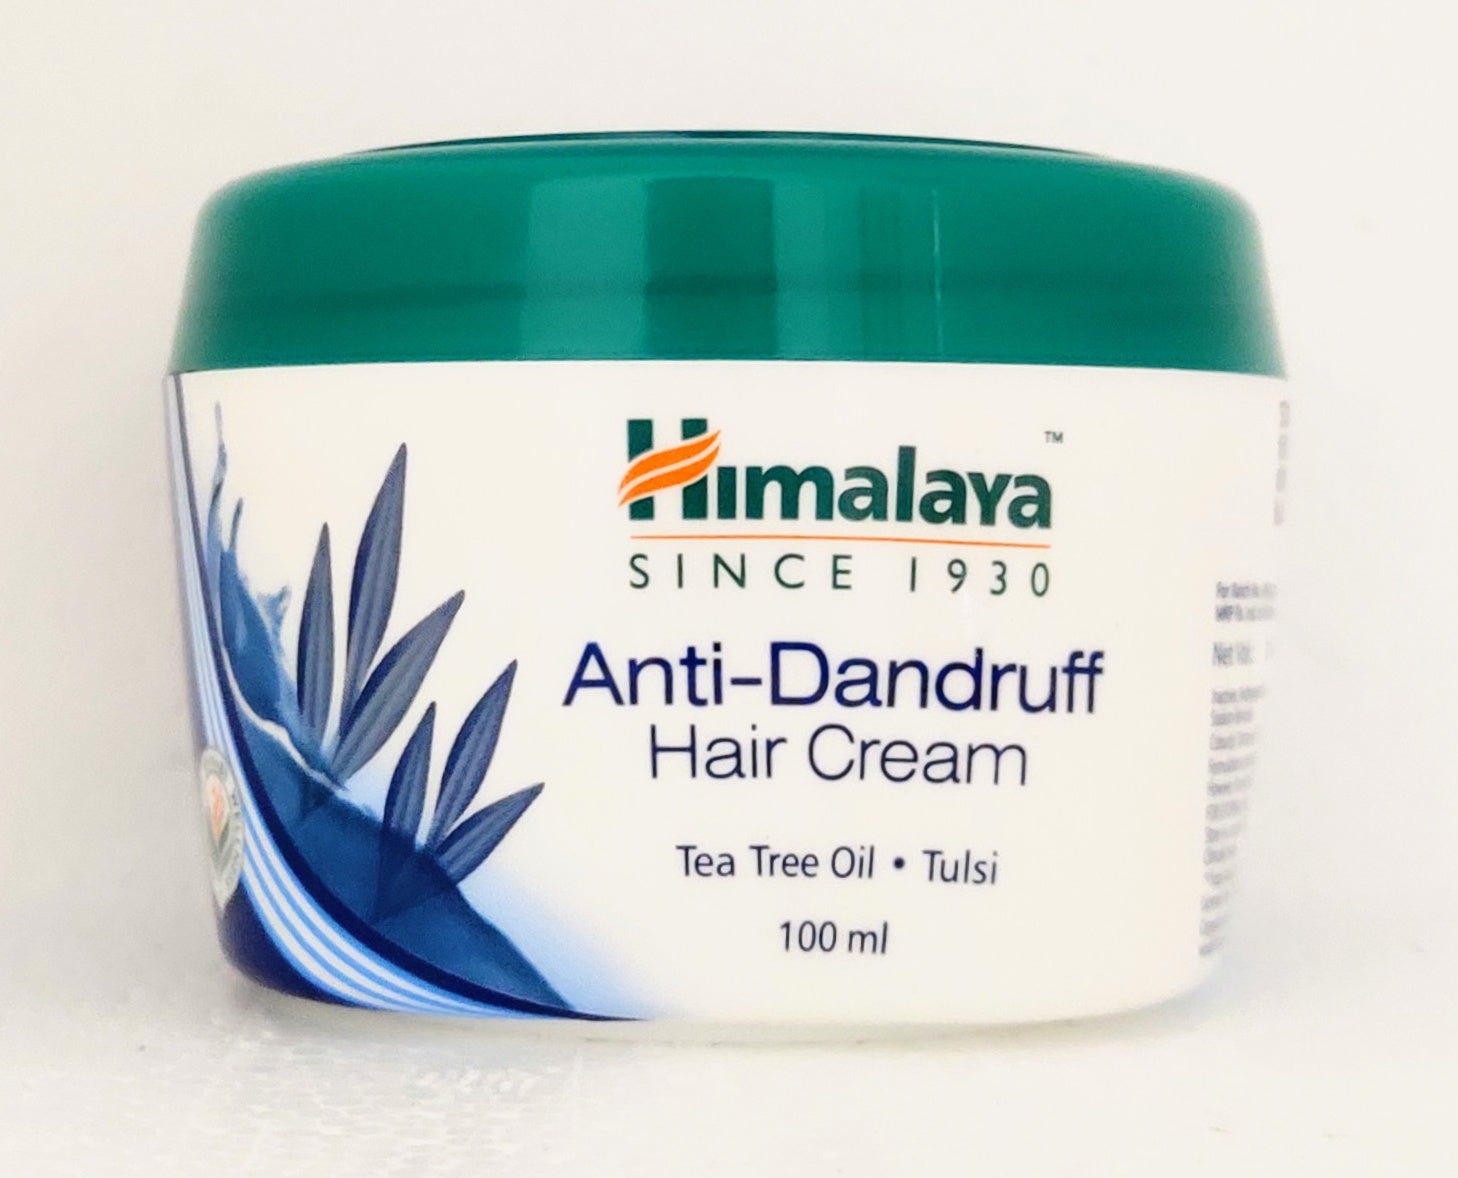 Shop Himalaya anti dandruff hair cream 100ml at price 90.00 from Himalaya Online - Ayush Care